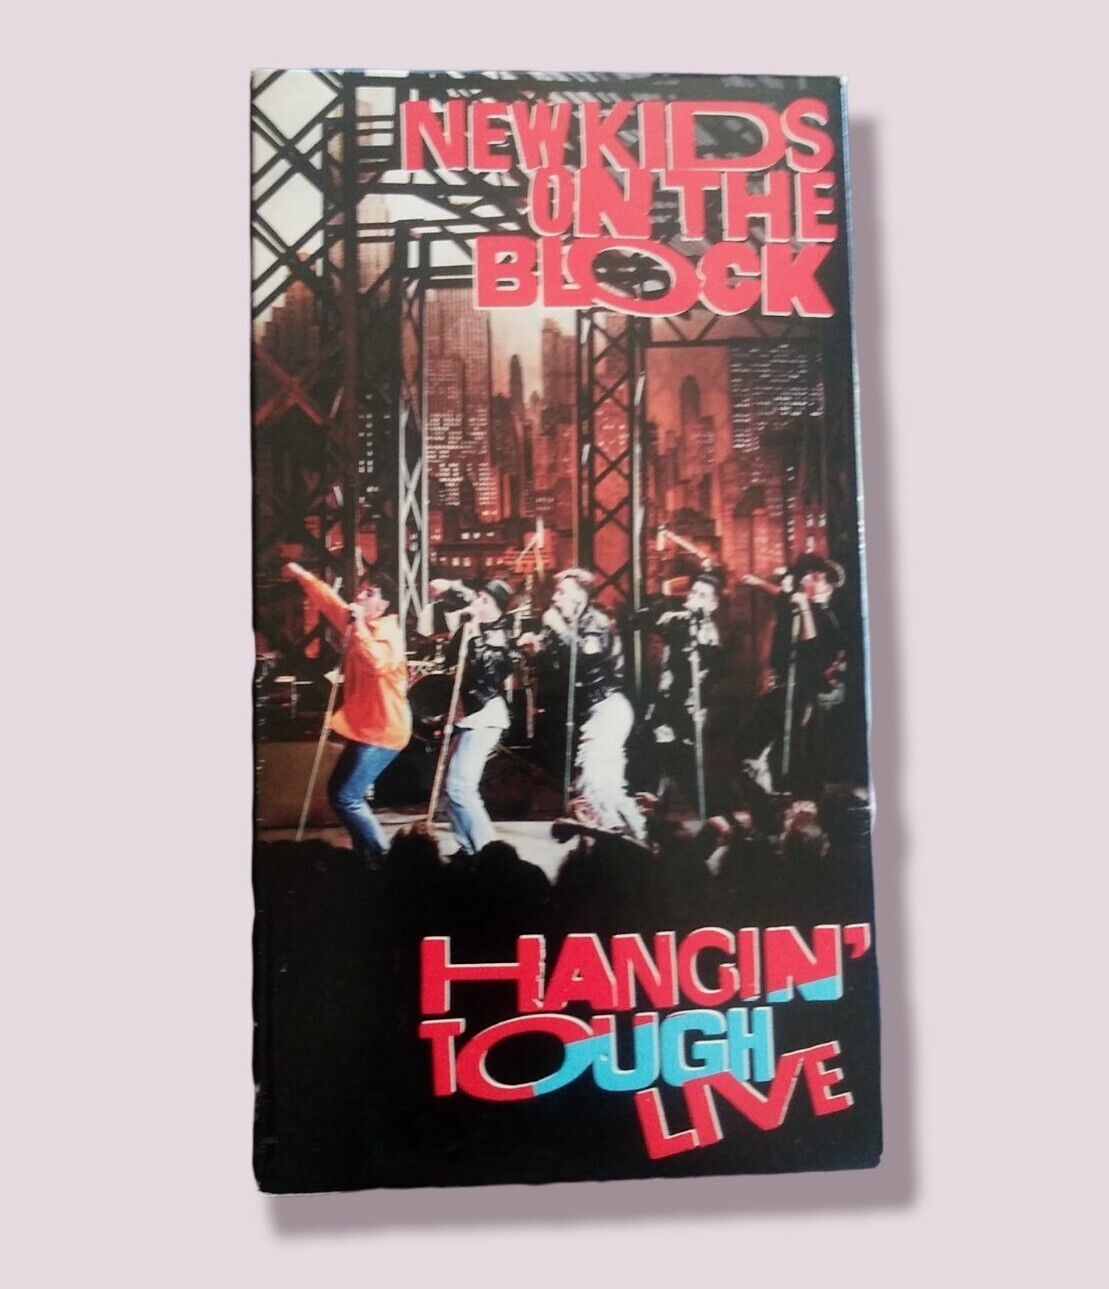 New Kids On The Block - Hangin' Tough Live VHS 1989 NKOTB Vintage 80s